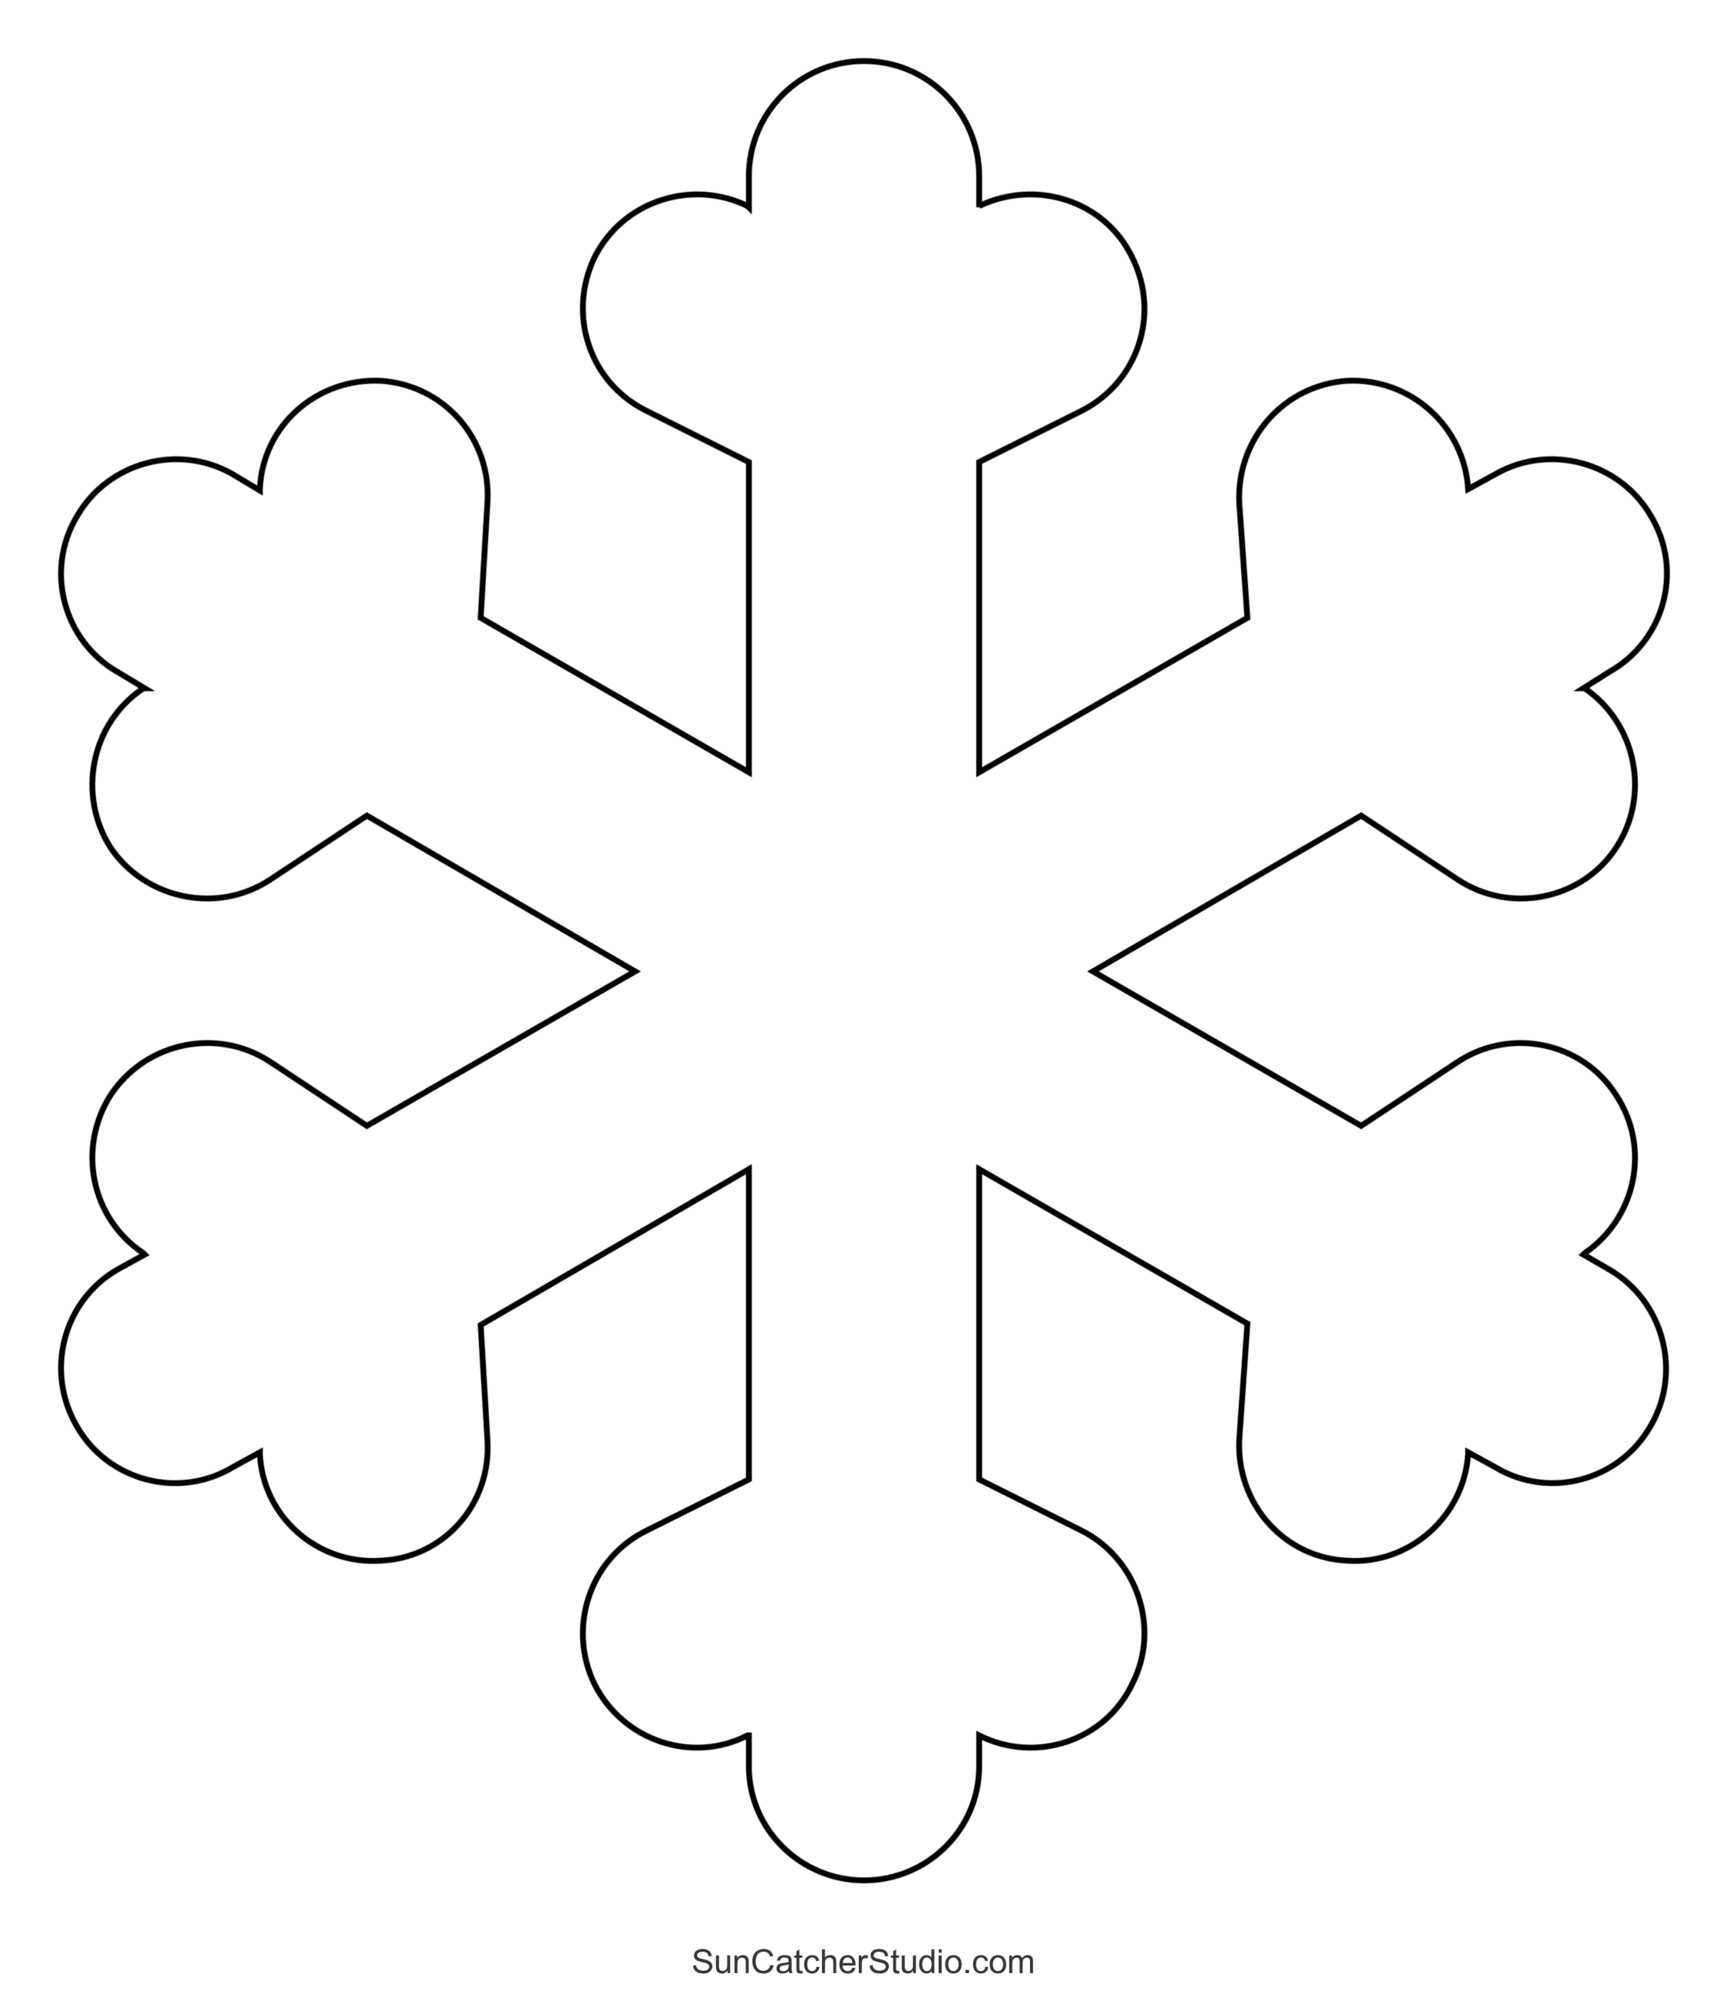 Free Printable Snowflake Templates – 10 Large & Small Stencil Patterns   Snowflake template, Snowflake coloring pages, Printable snowflake template